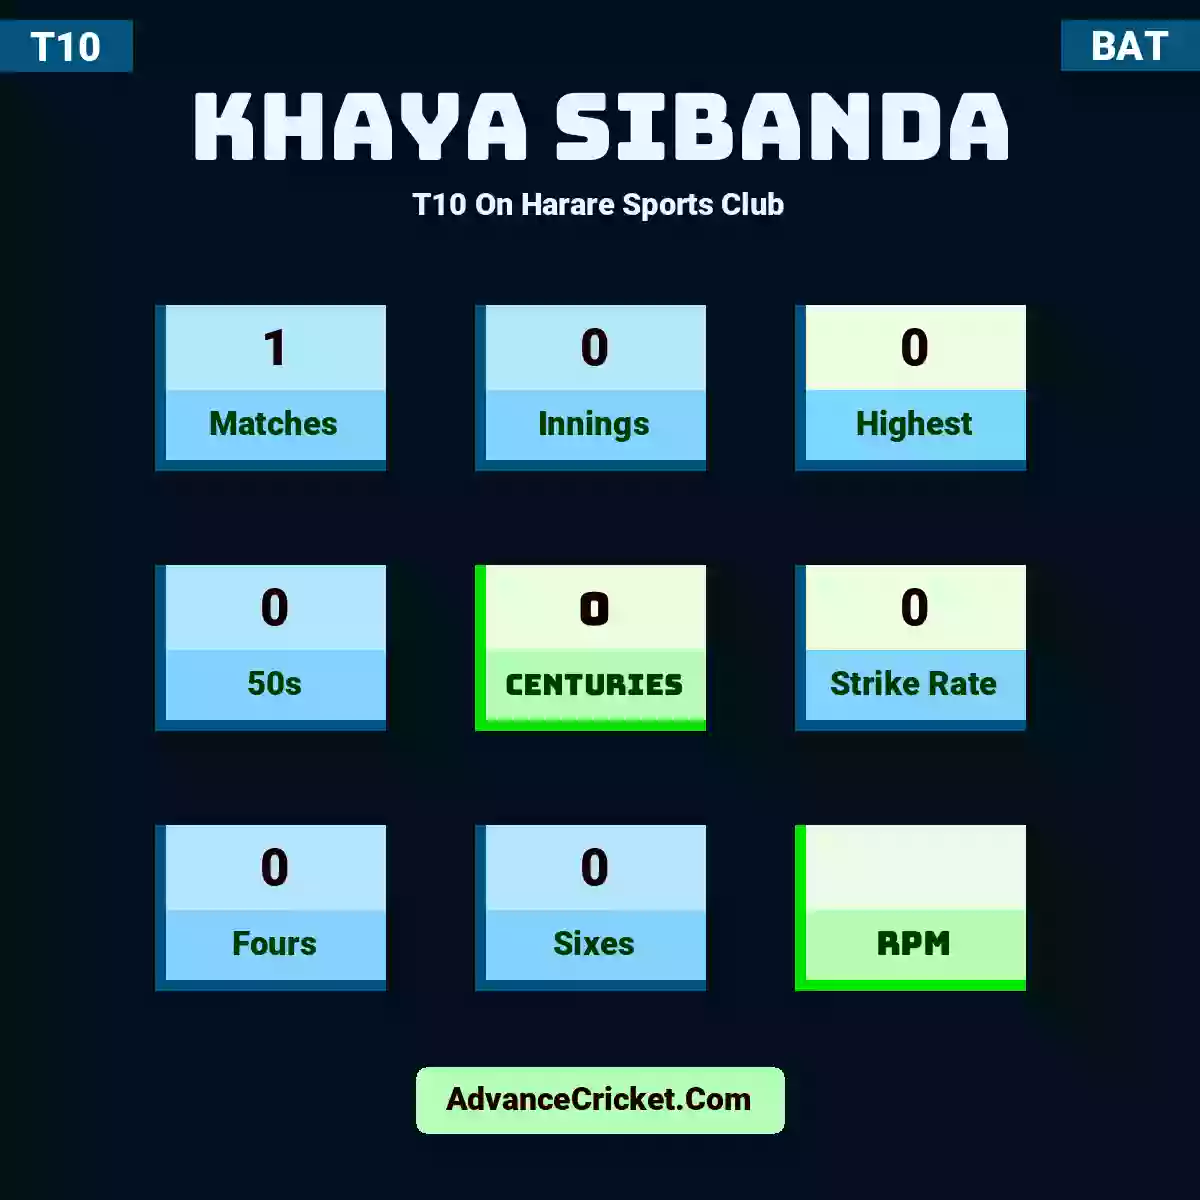 Khaya Sibanda T10  On Harare Sports Club, Khaya Sibanda played 1 matches, scored 0 runs as highest, 0 half-centuries, and 0 centuries, with a strike rate of 0. Khaya.Sibanda hit 0 fours and 0 sixes.